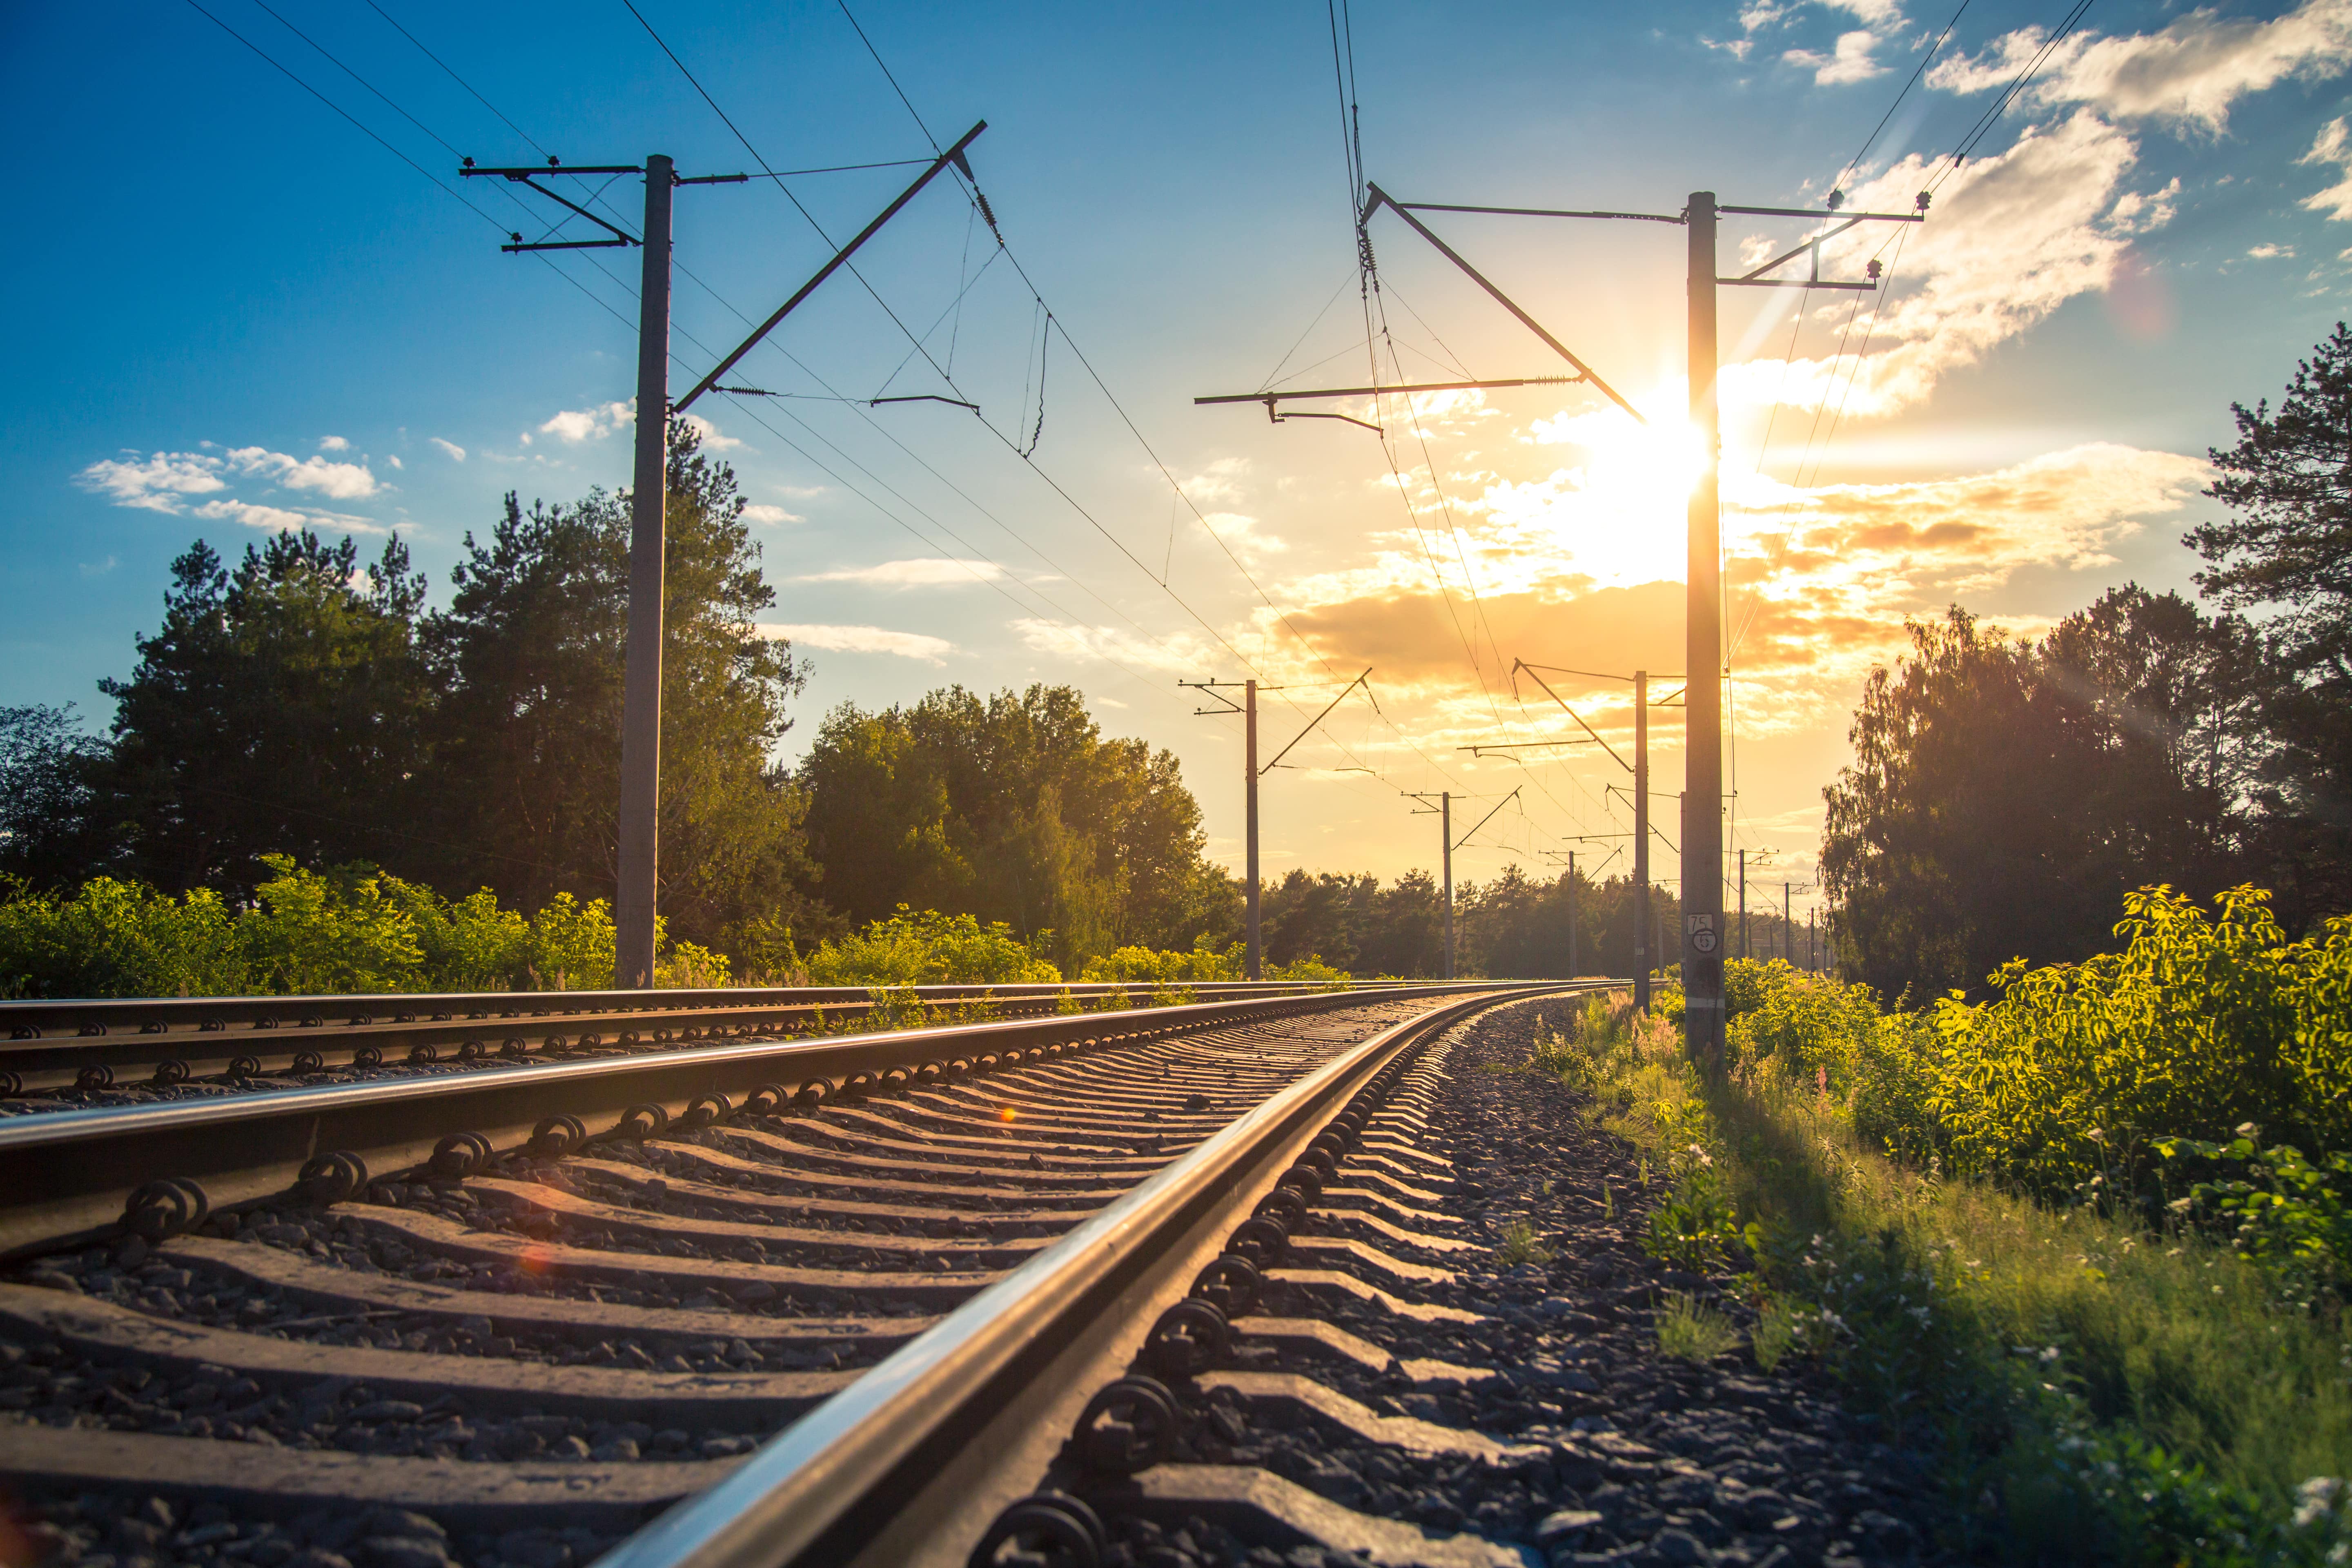 Rail tracks with sunshining